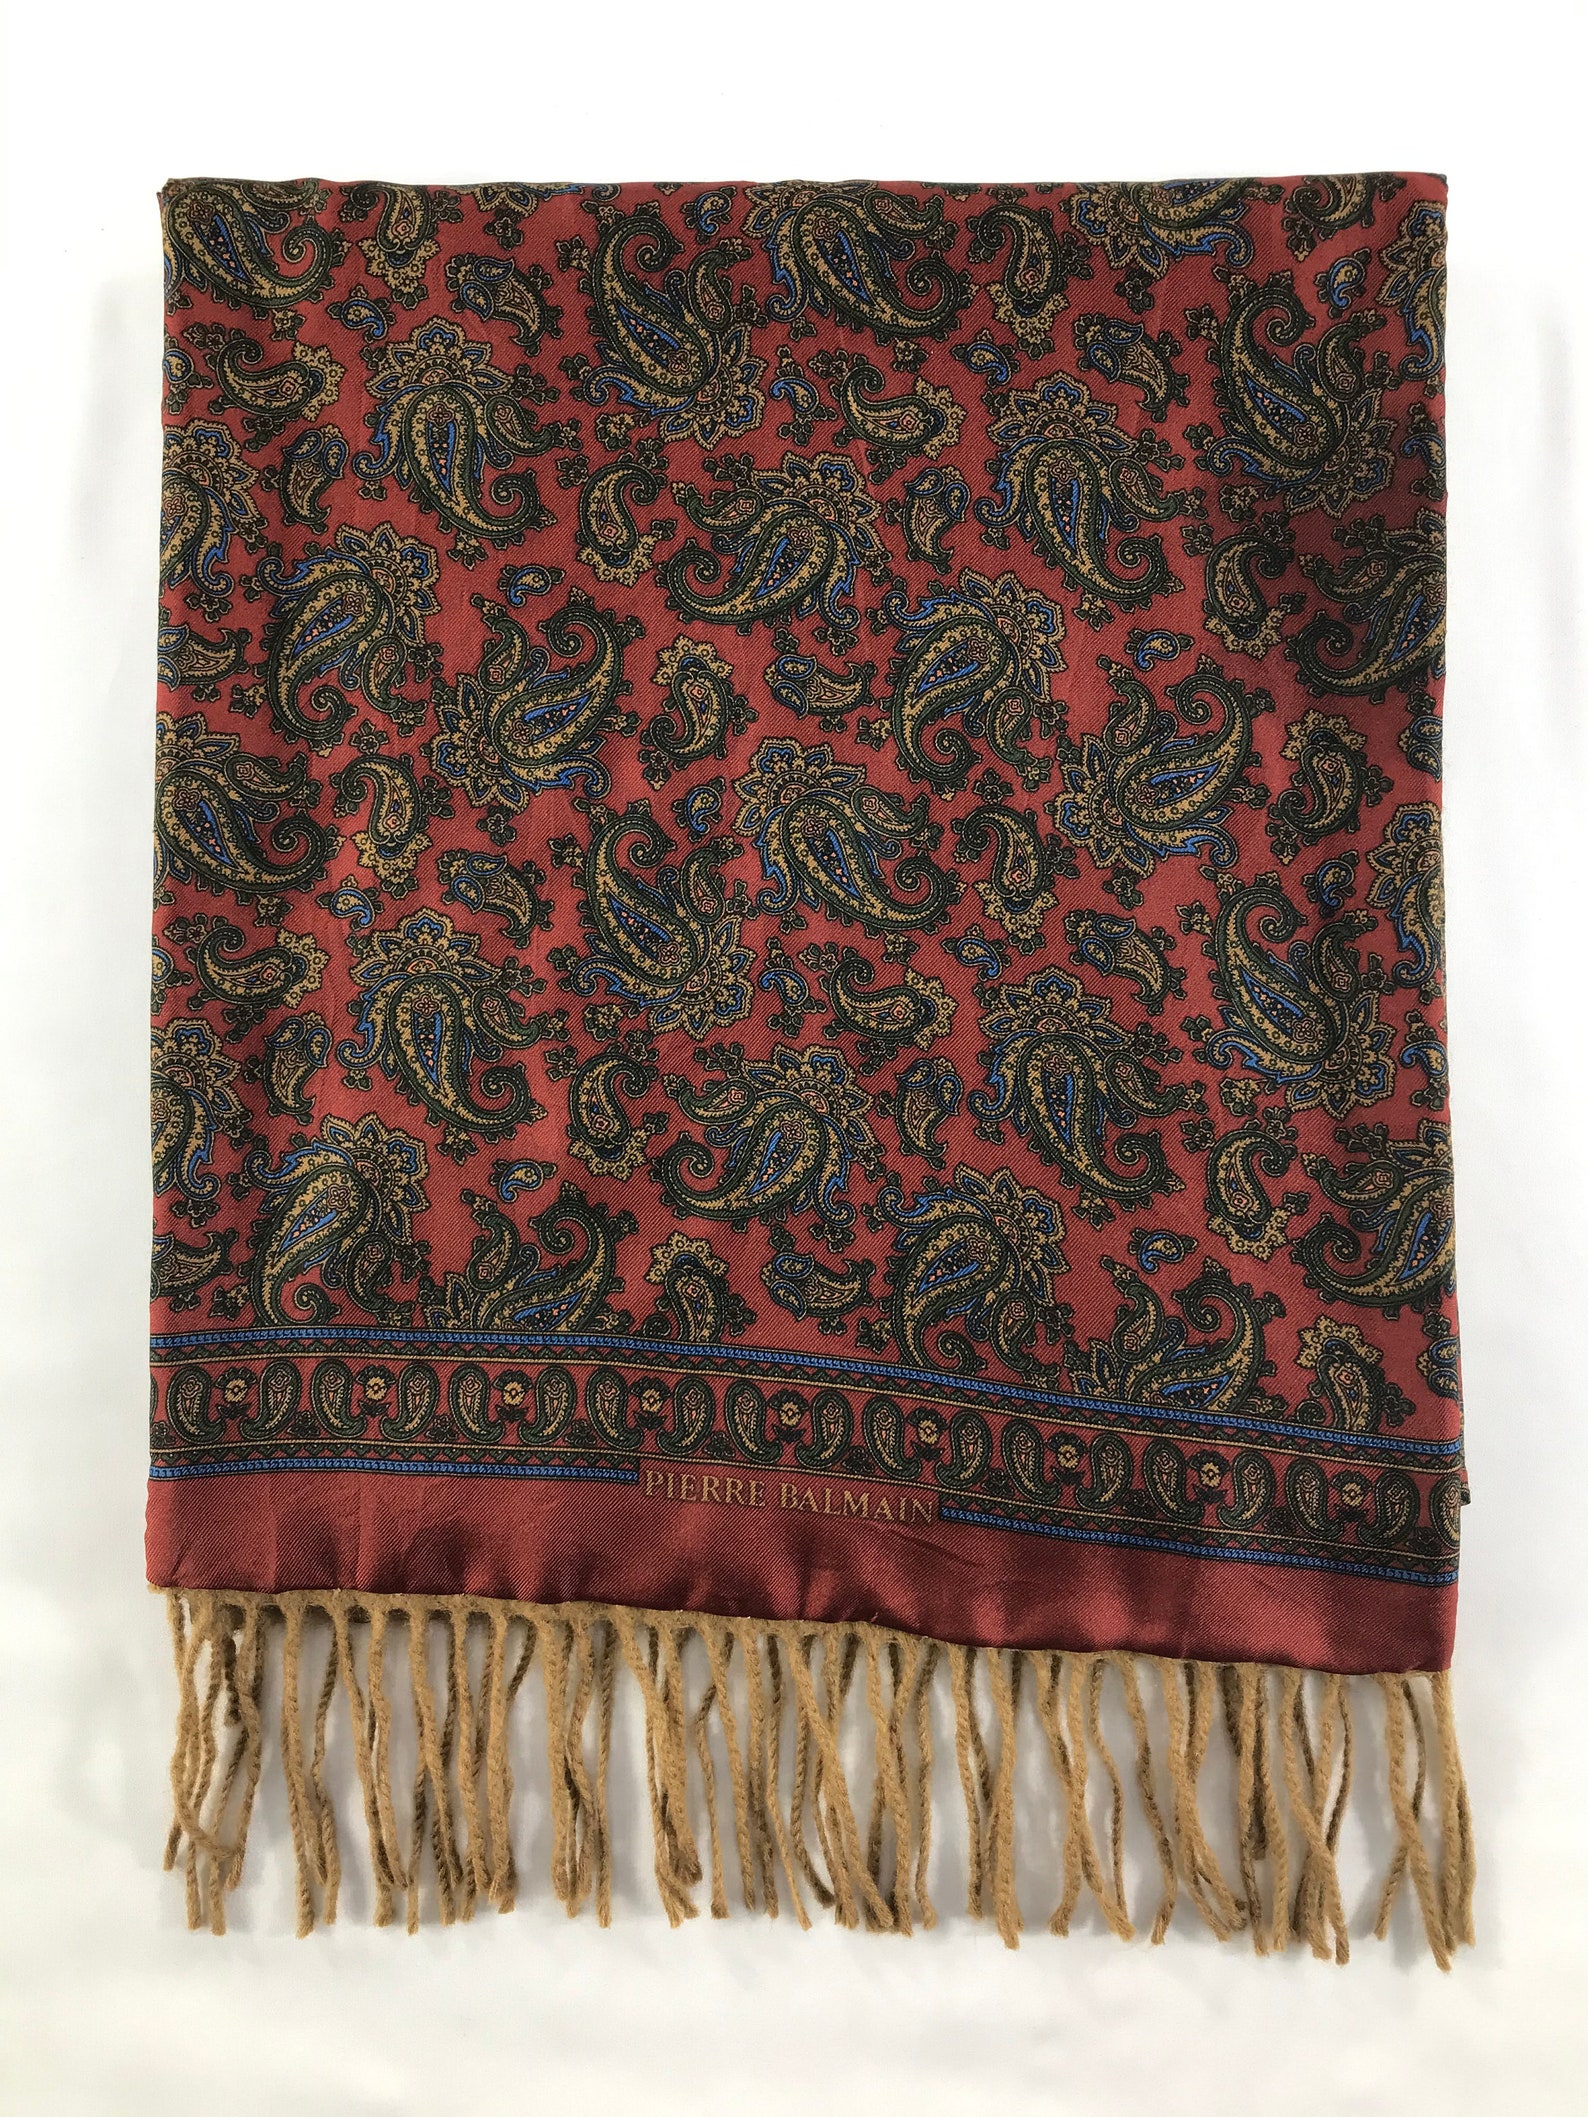 Pierre Balmain Scarf Muffler Neckwear Multicolor scarf Luxury | Etsy